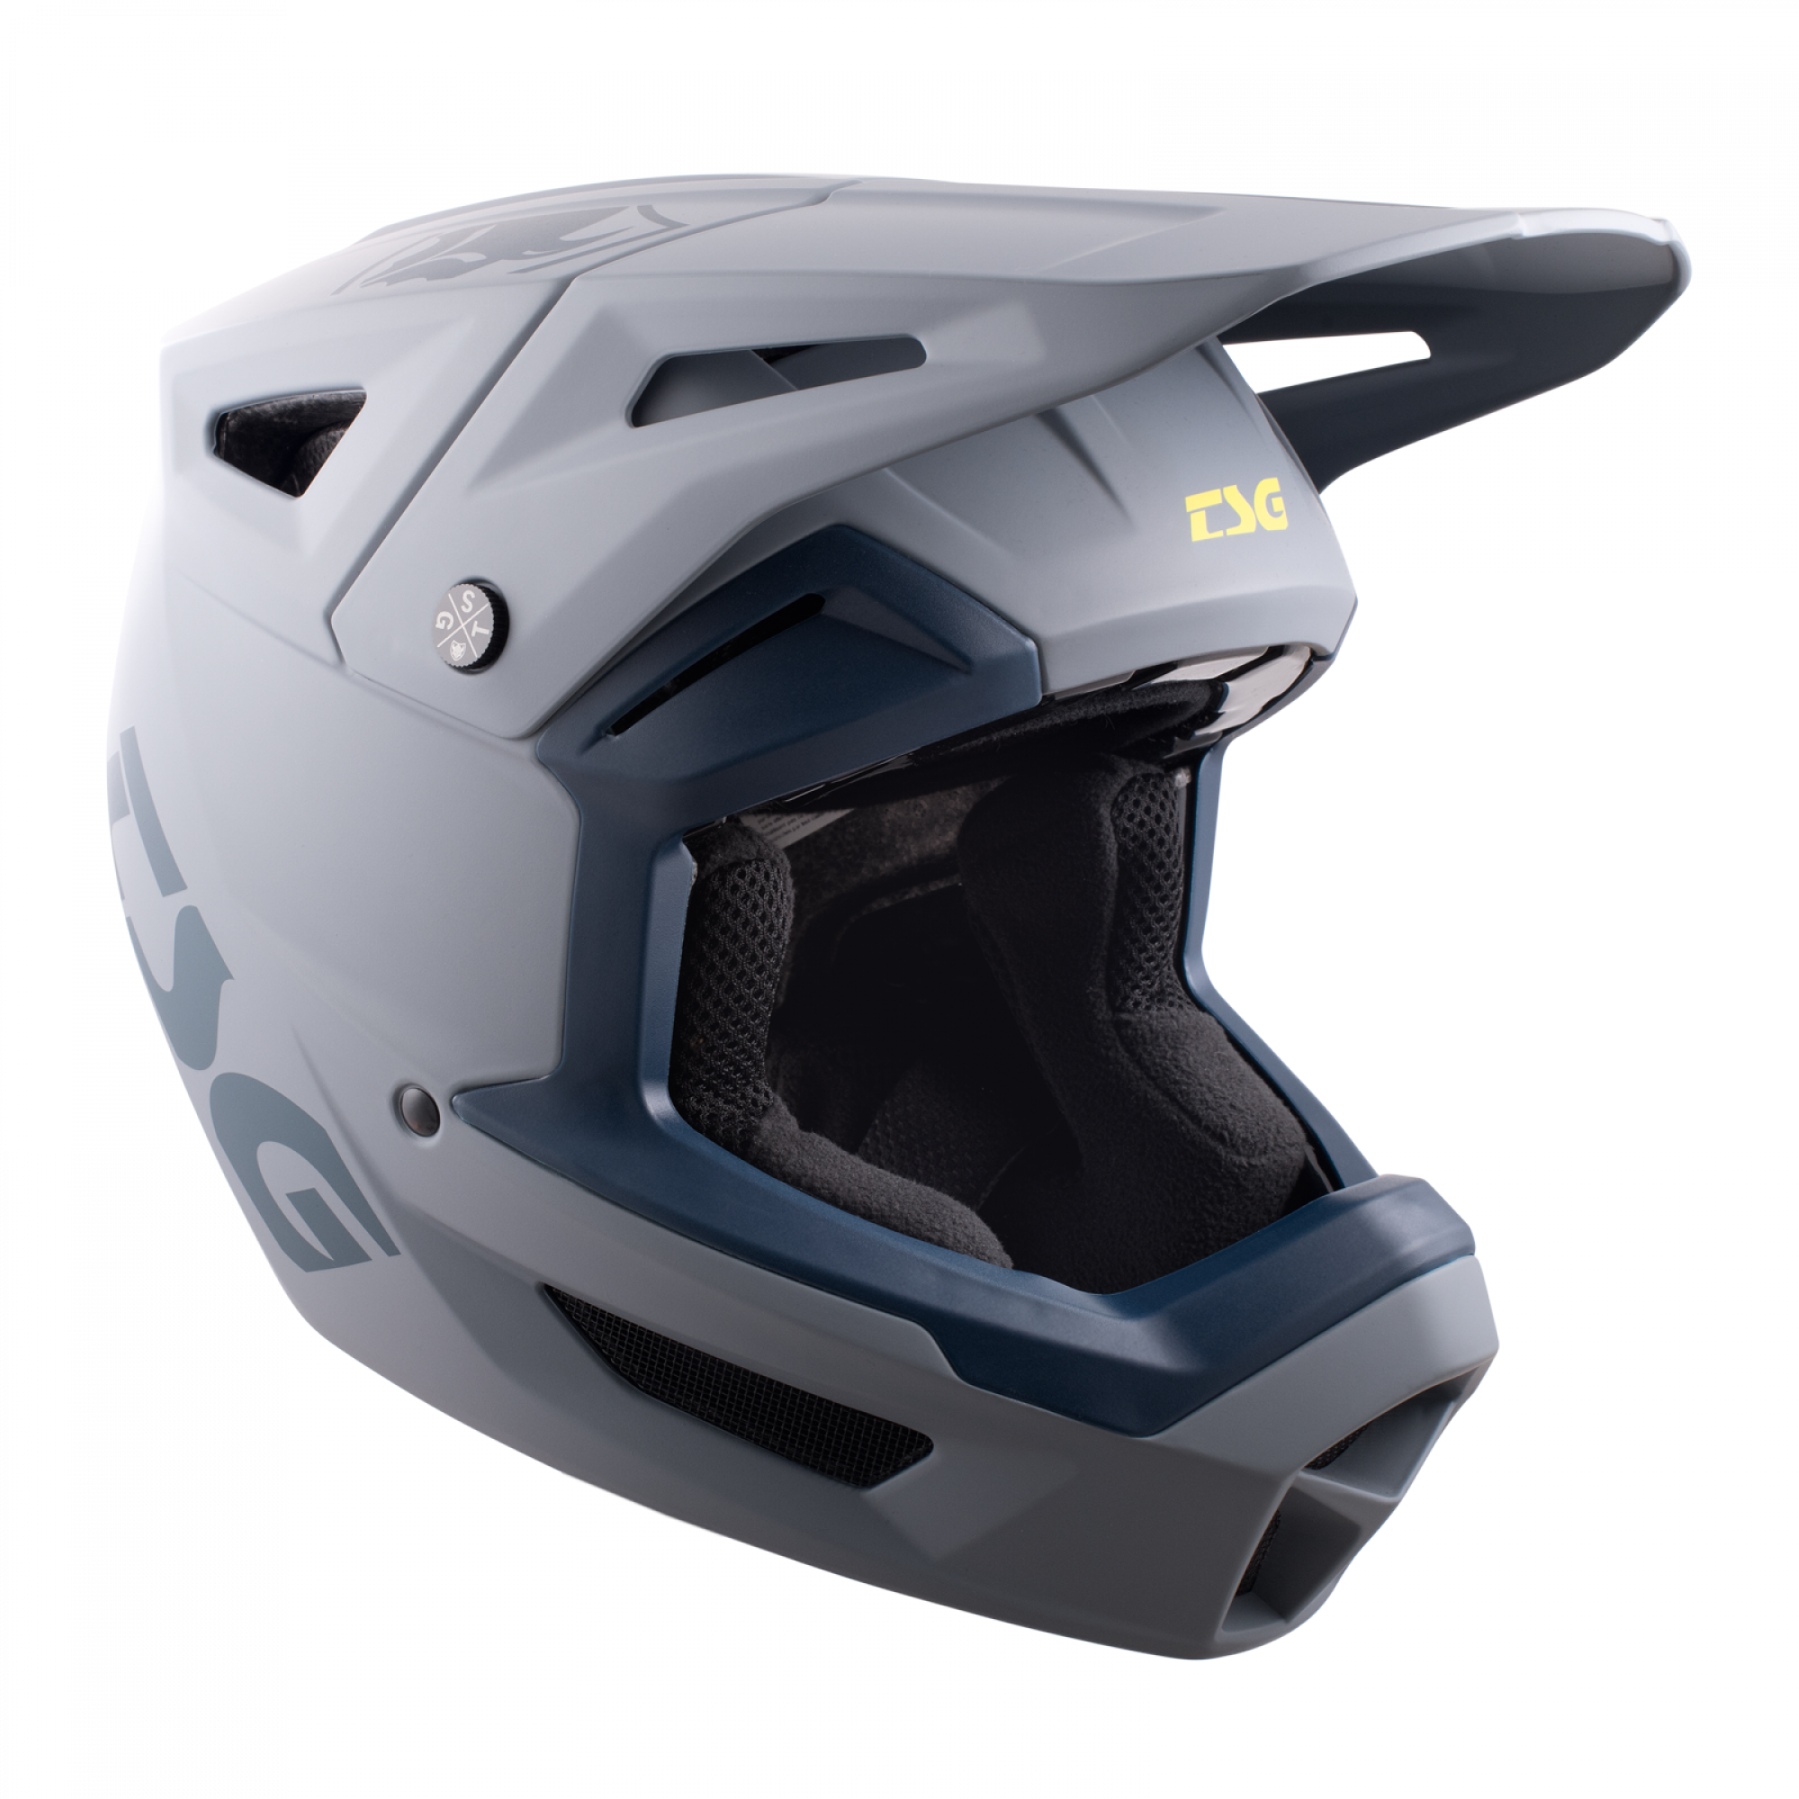 Productfoto van TSG Sentinel Solid Color Helm - satin grey